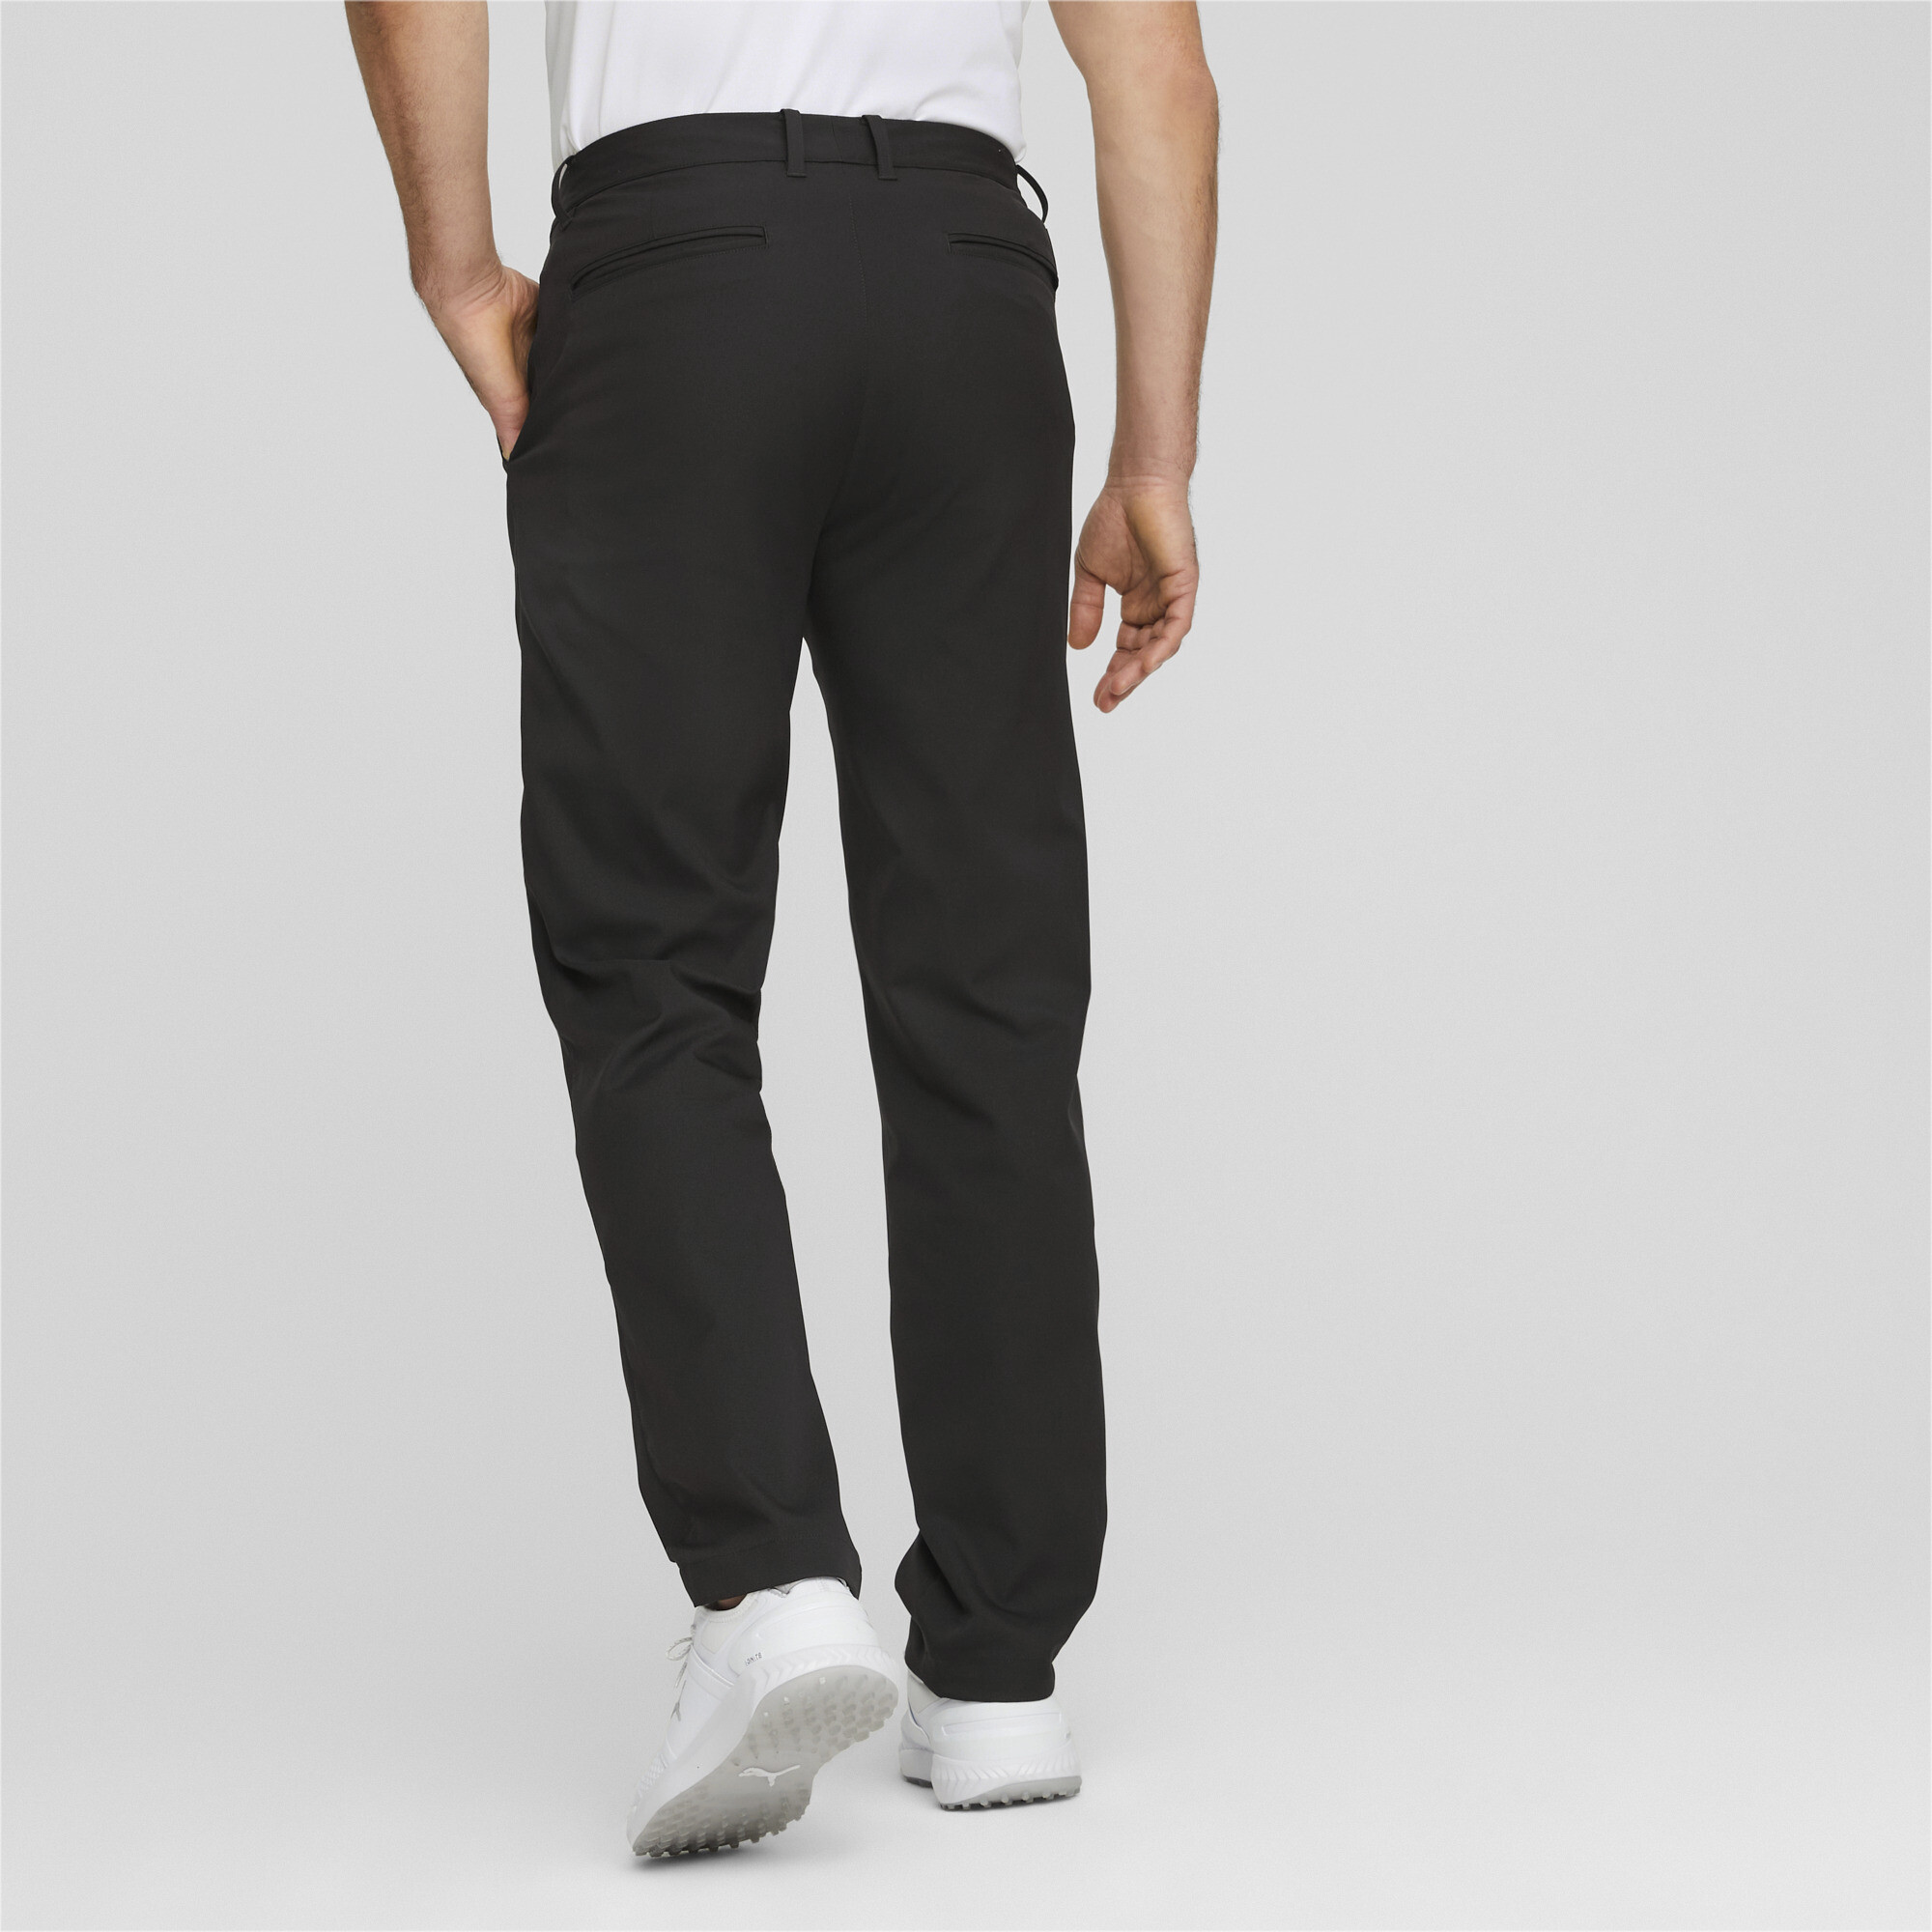 Men's Puma Dealer Golf Pants, Black, Size 38/30, Clothing